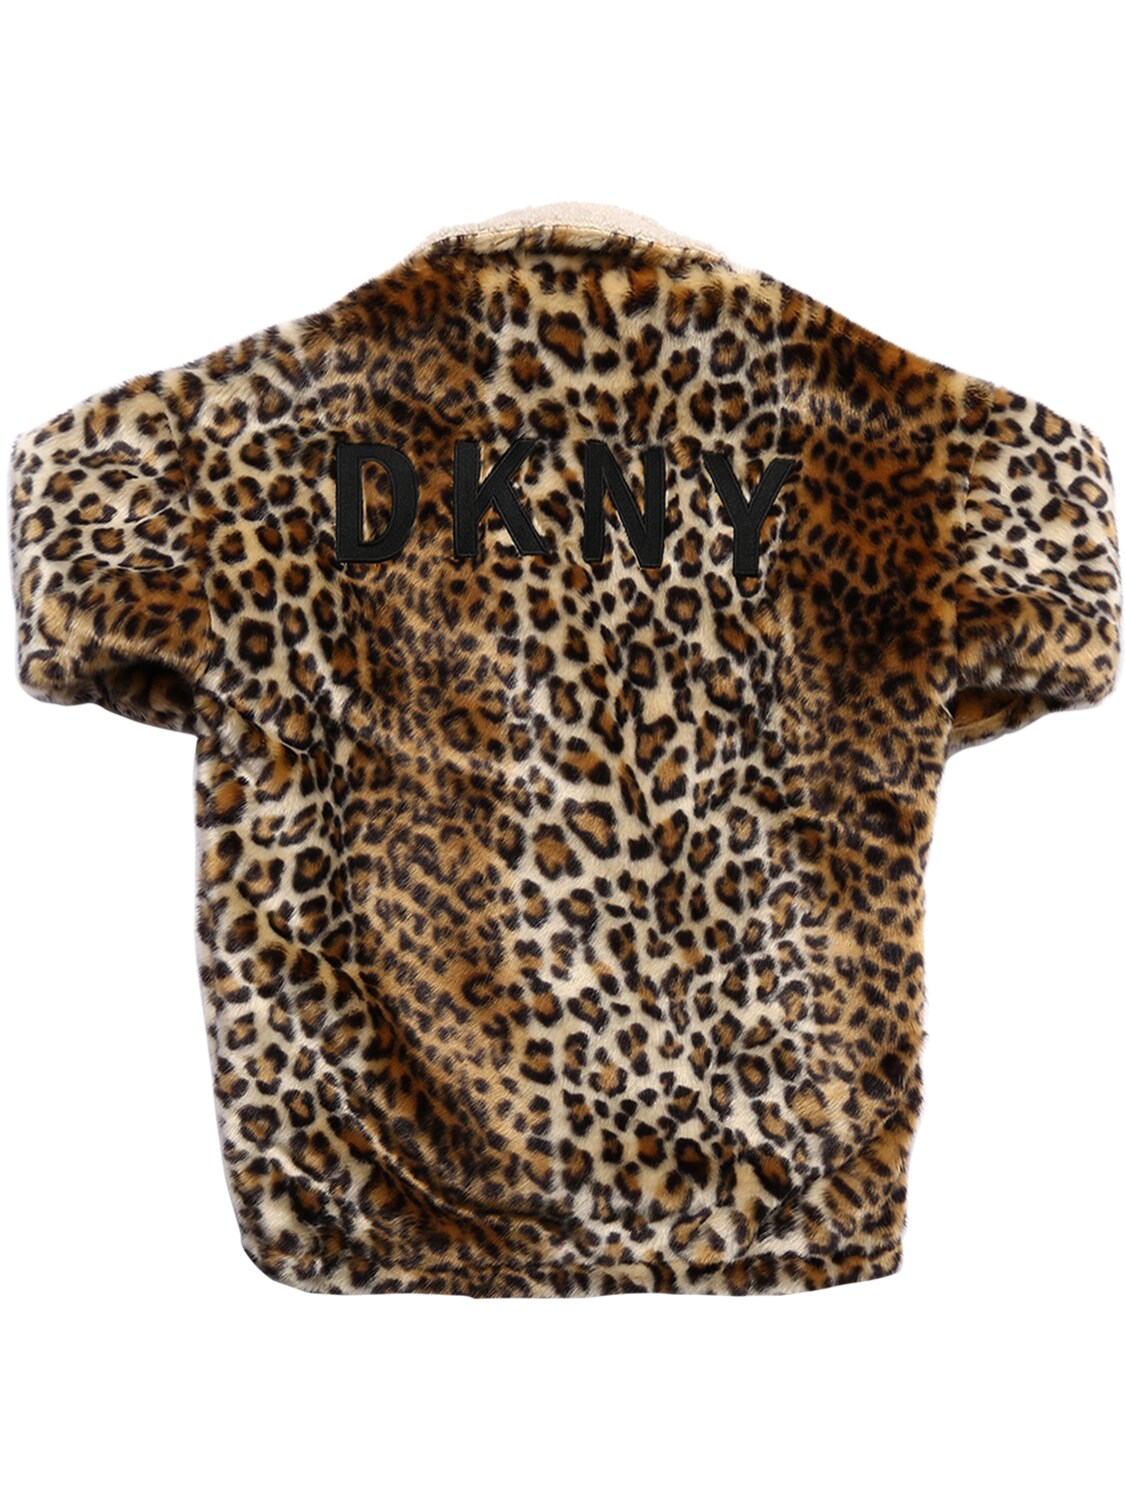 Dkny Leopard Print Faux Fur Coat | ModeSens